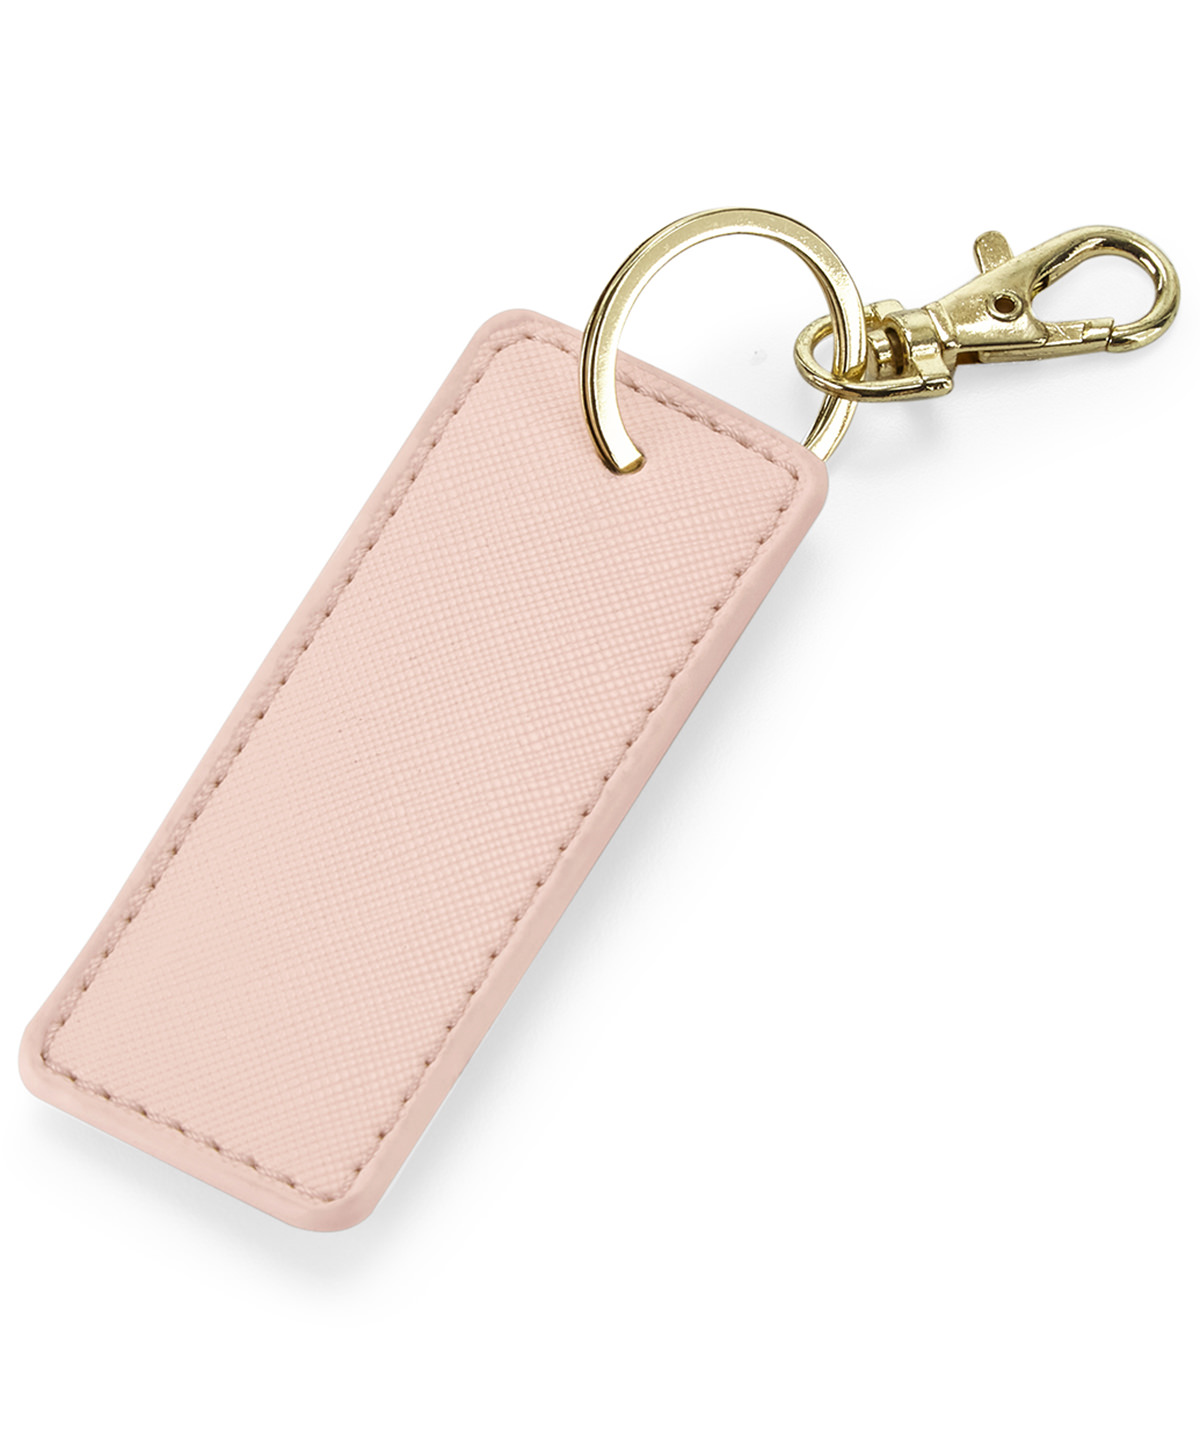 Boutique Keyclip Soft Pink Size One Size